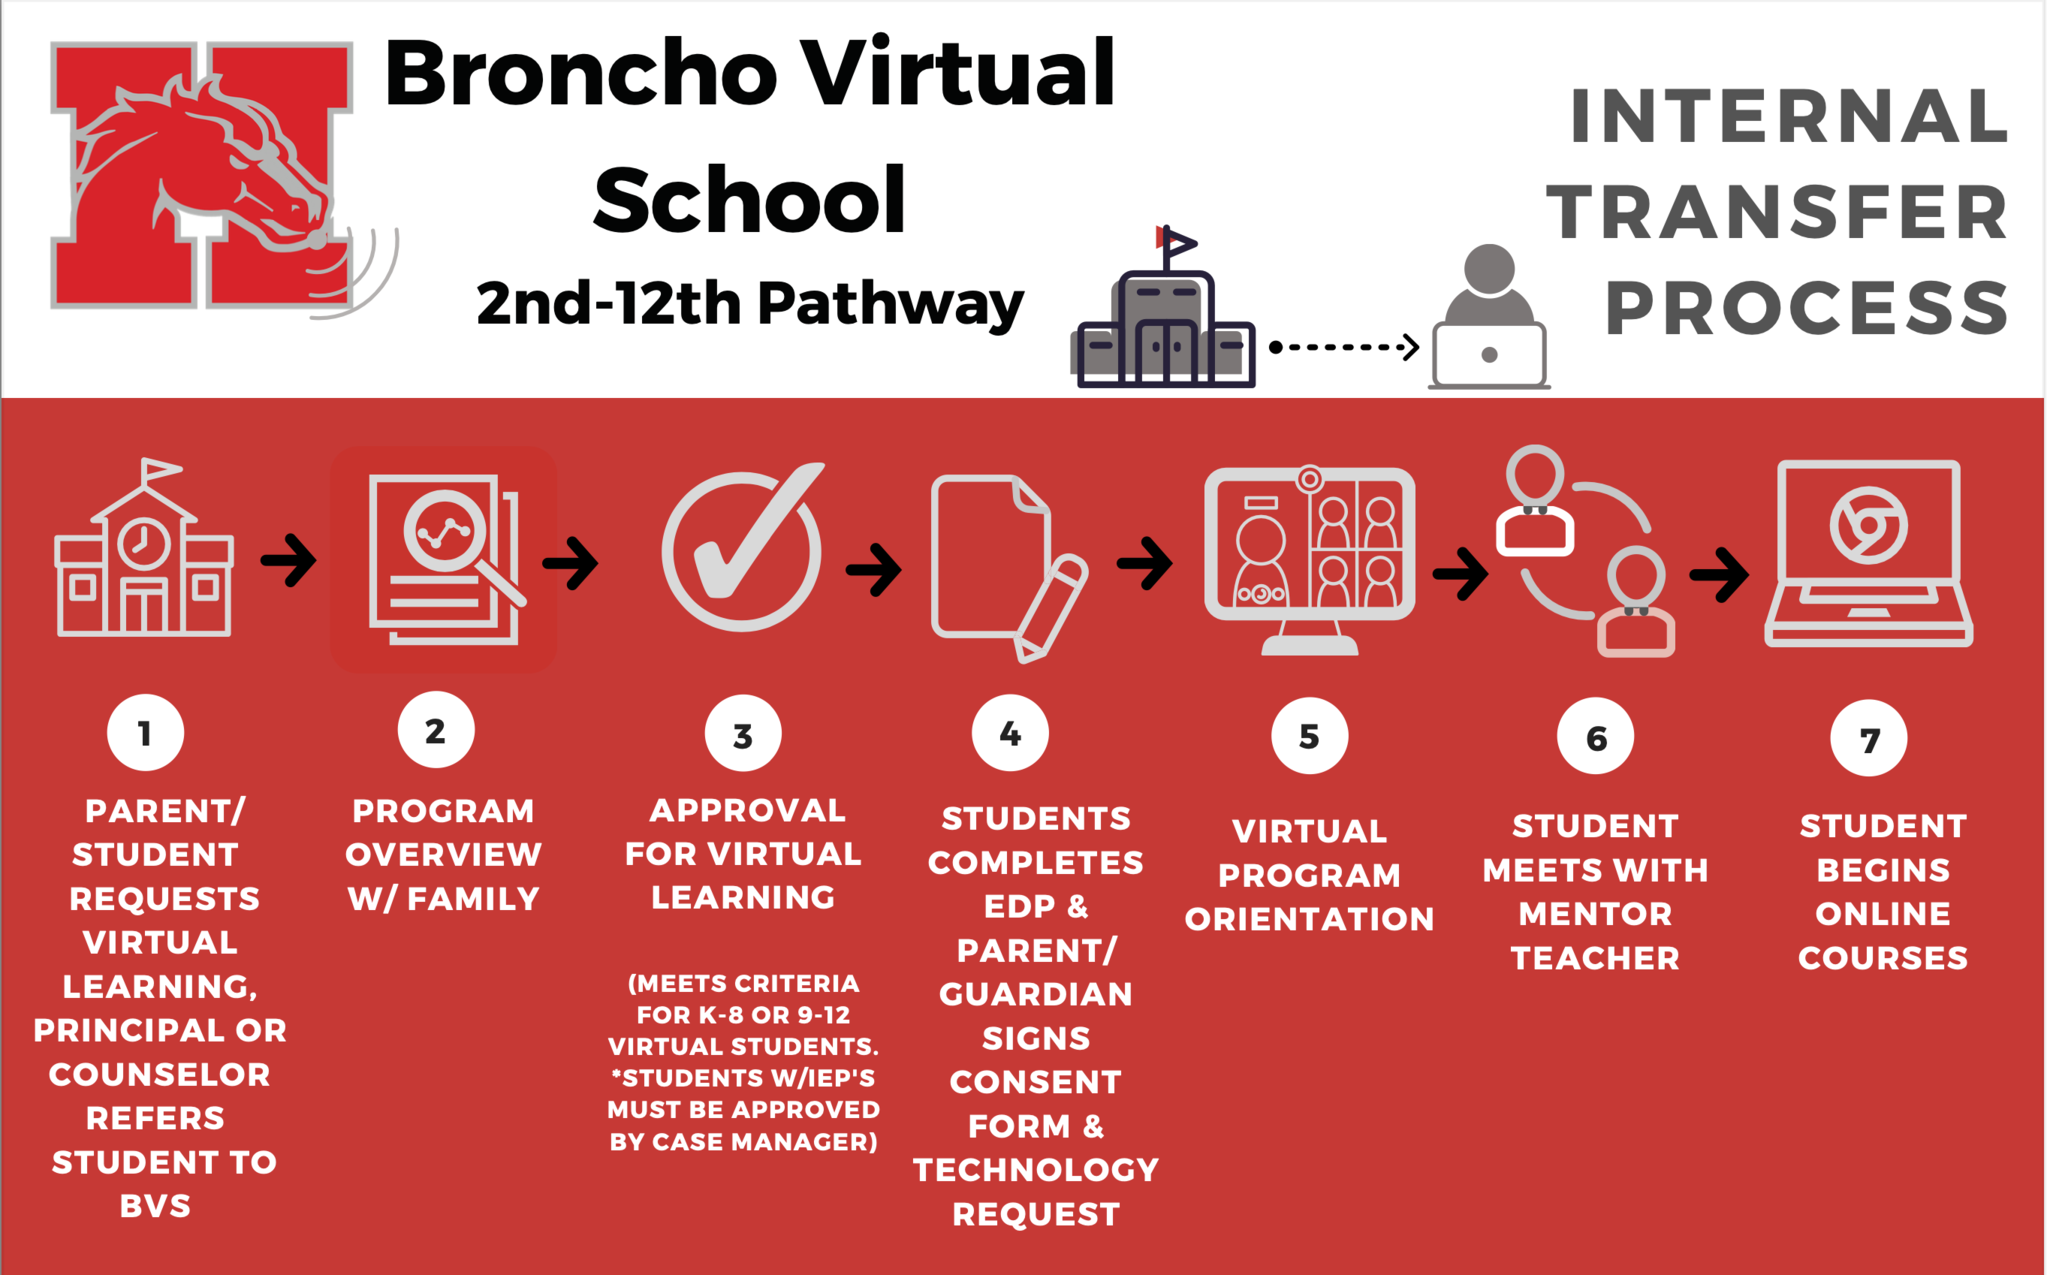 Broncho Virtual School Internal Transfer Process 23-24